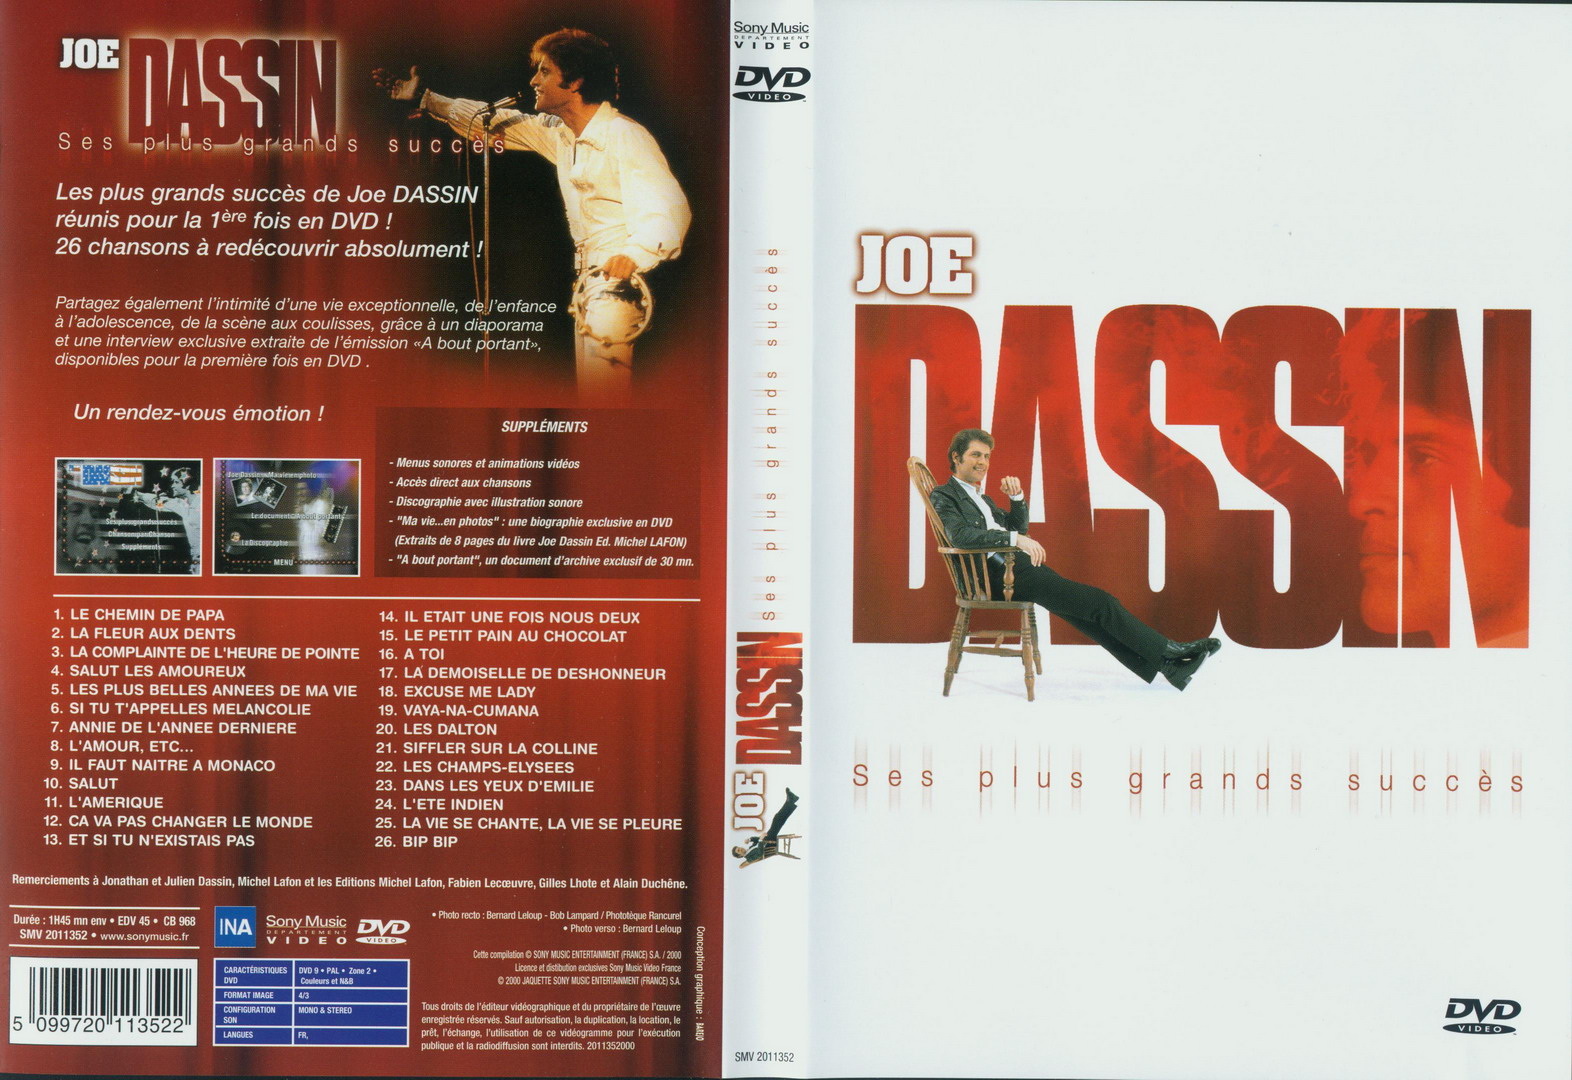 Jaquette DVD Joe Dassin ses plus grands succs